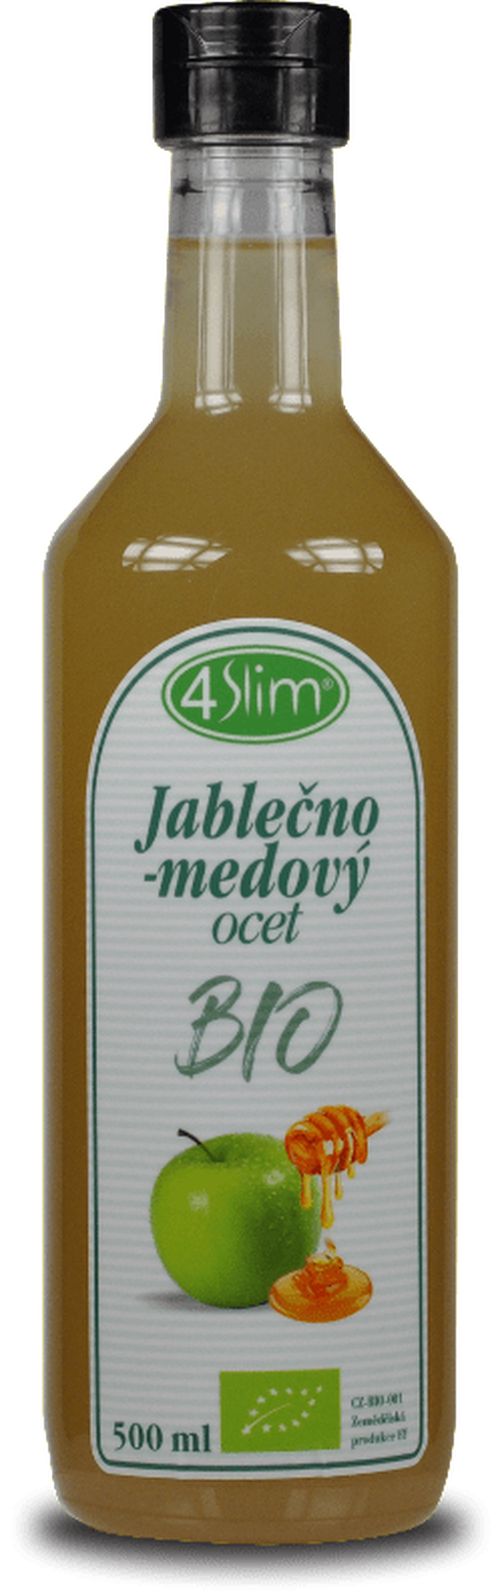 4Slim - Jablkovo-medový ocot BIO, 500 ml *CZ-BIO-001